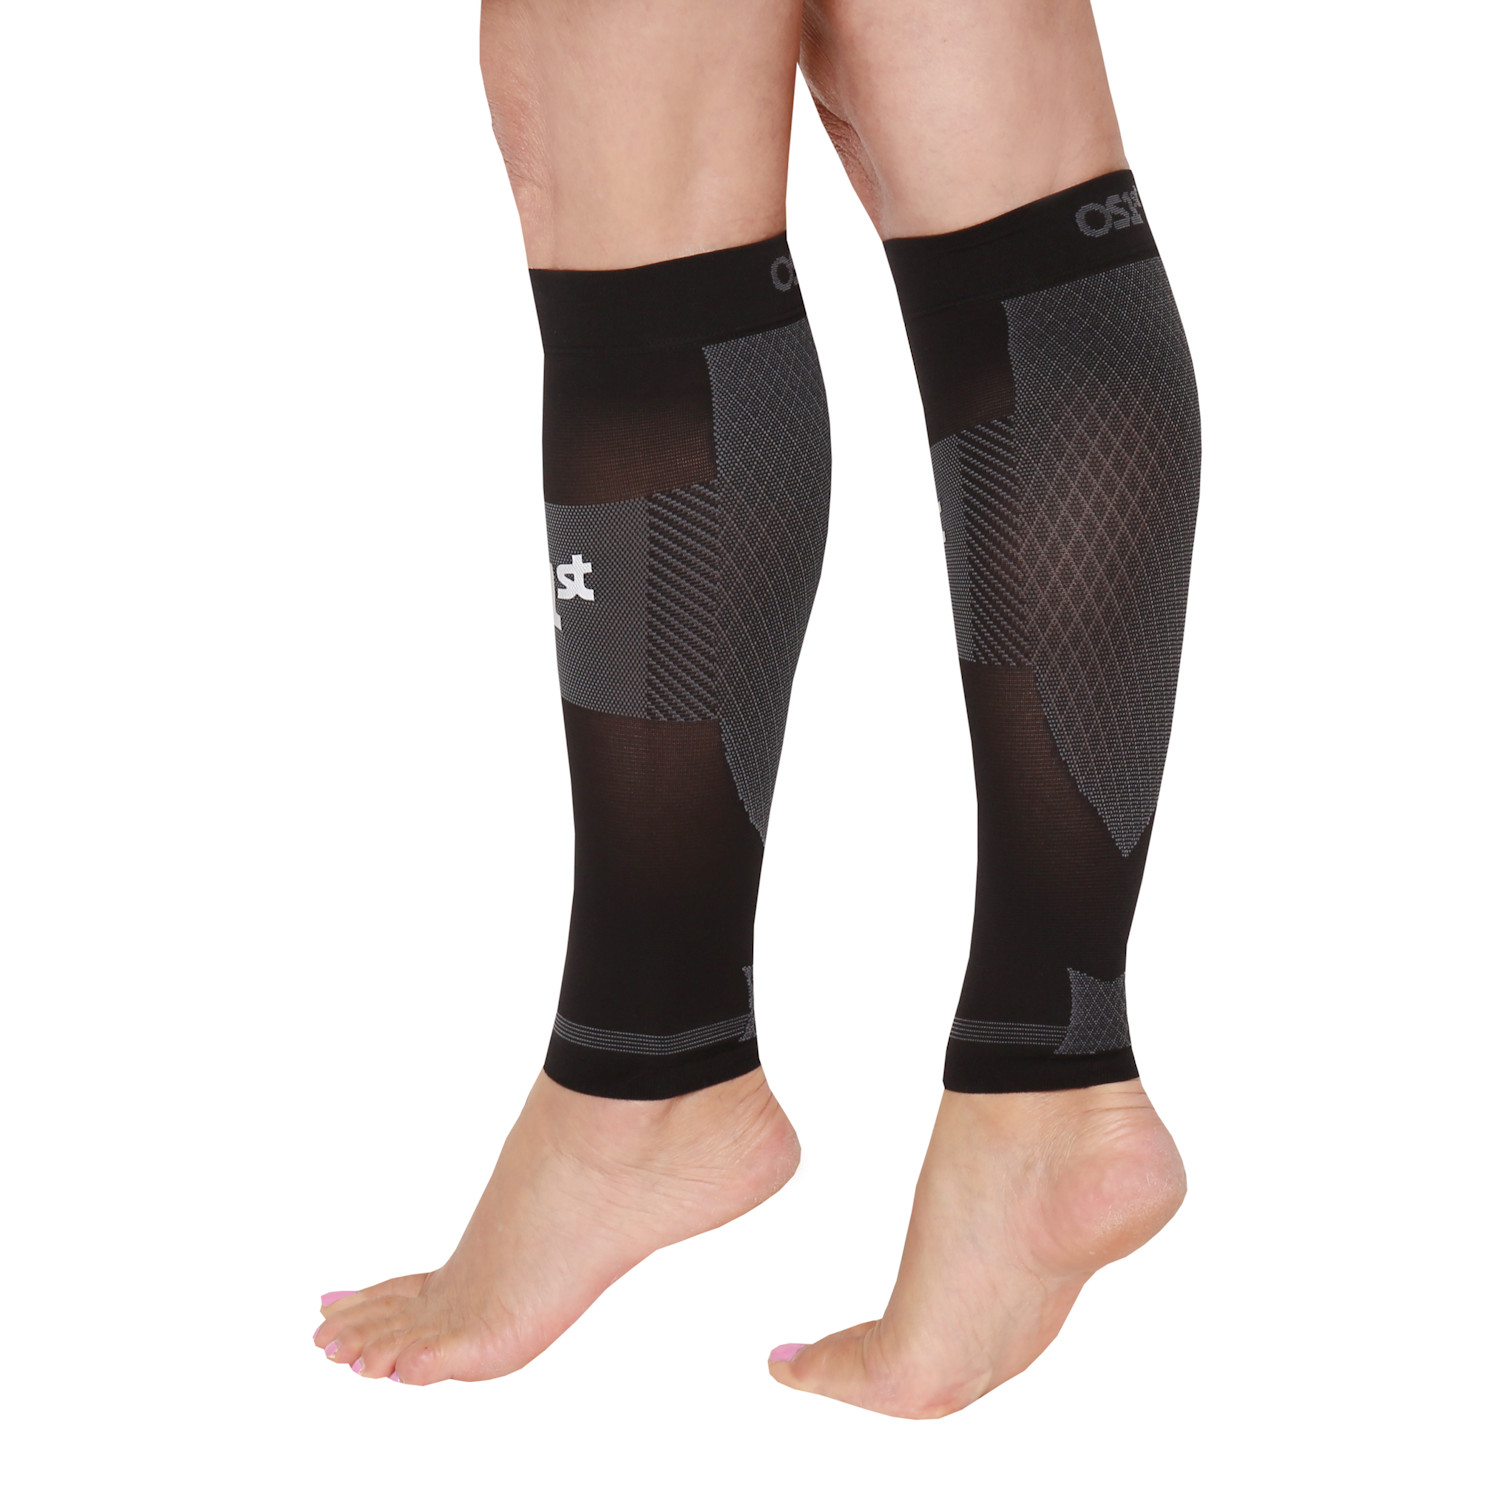 TA6 Unisex Moderate Compression Knee High Thin Air Calf Sleeves ...